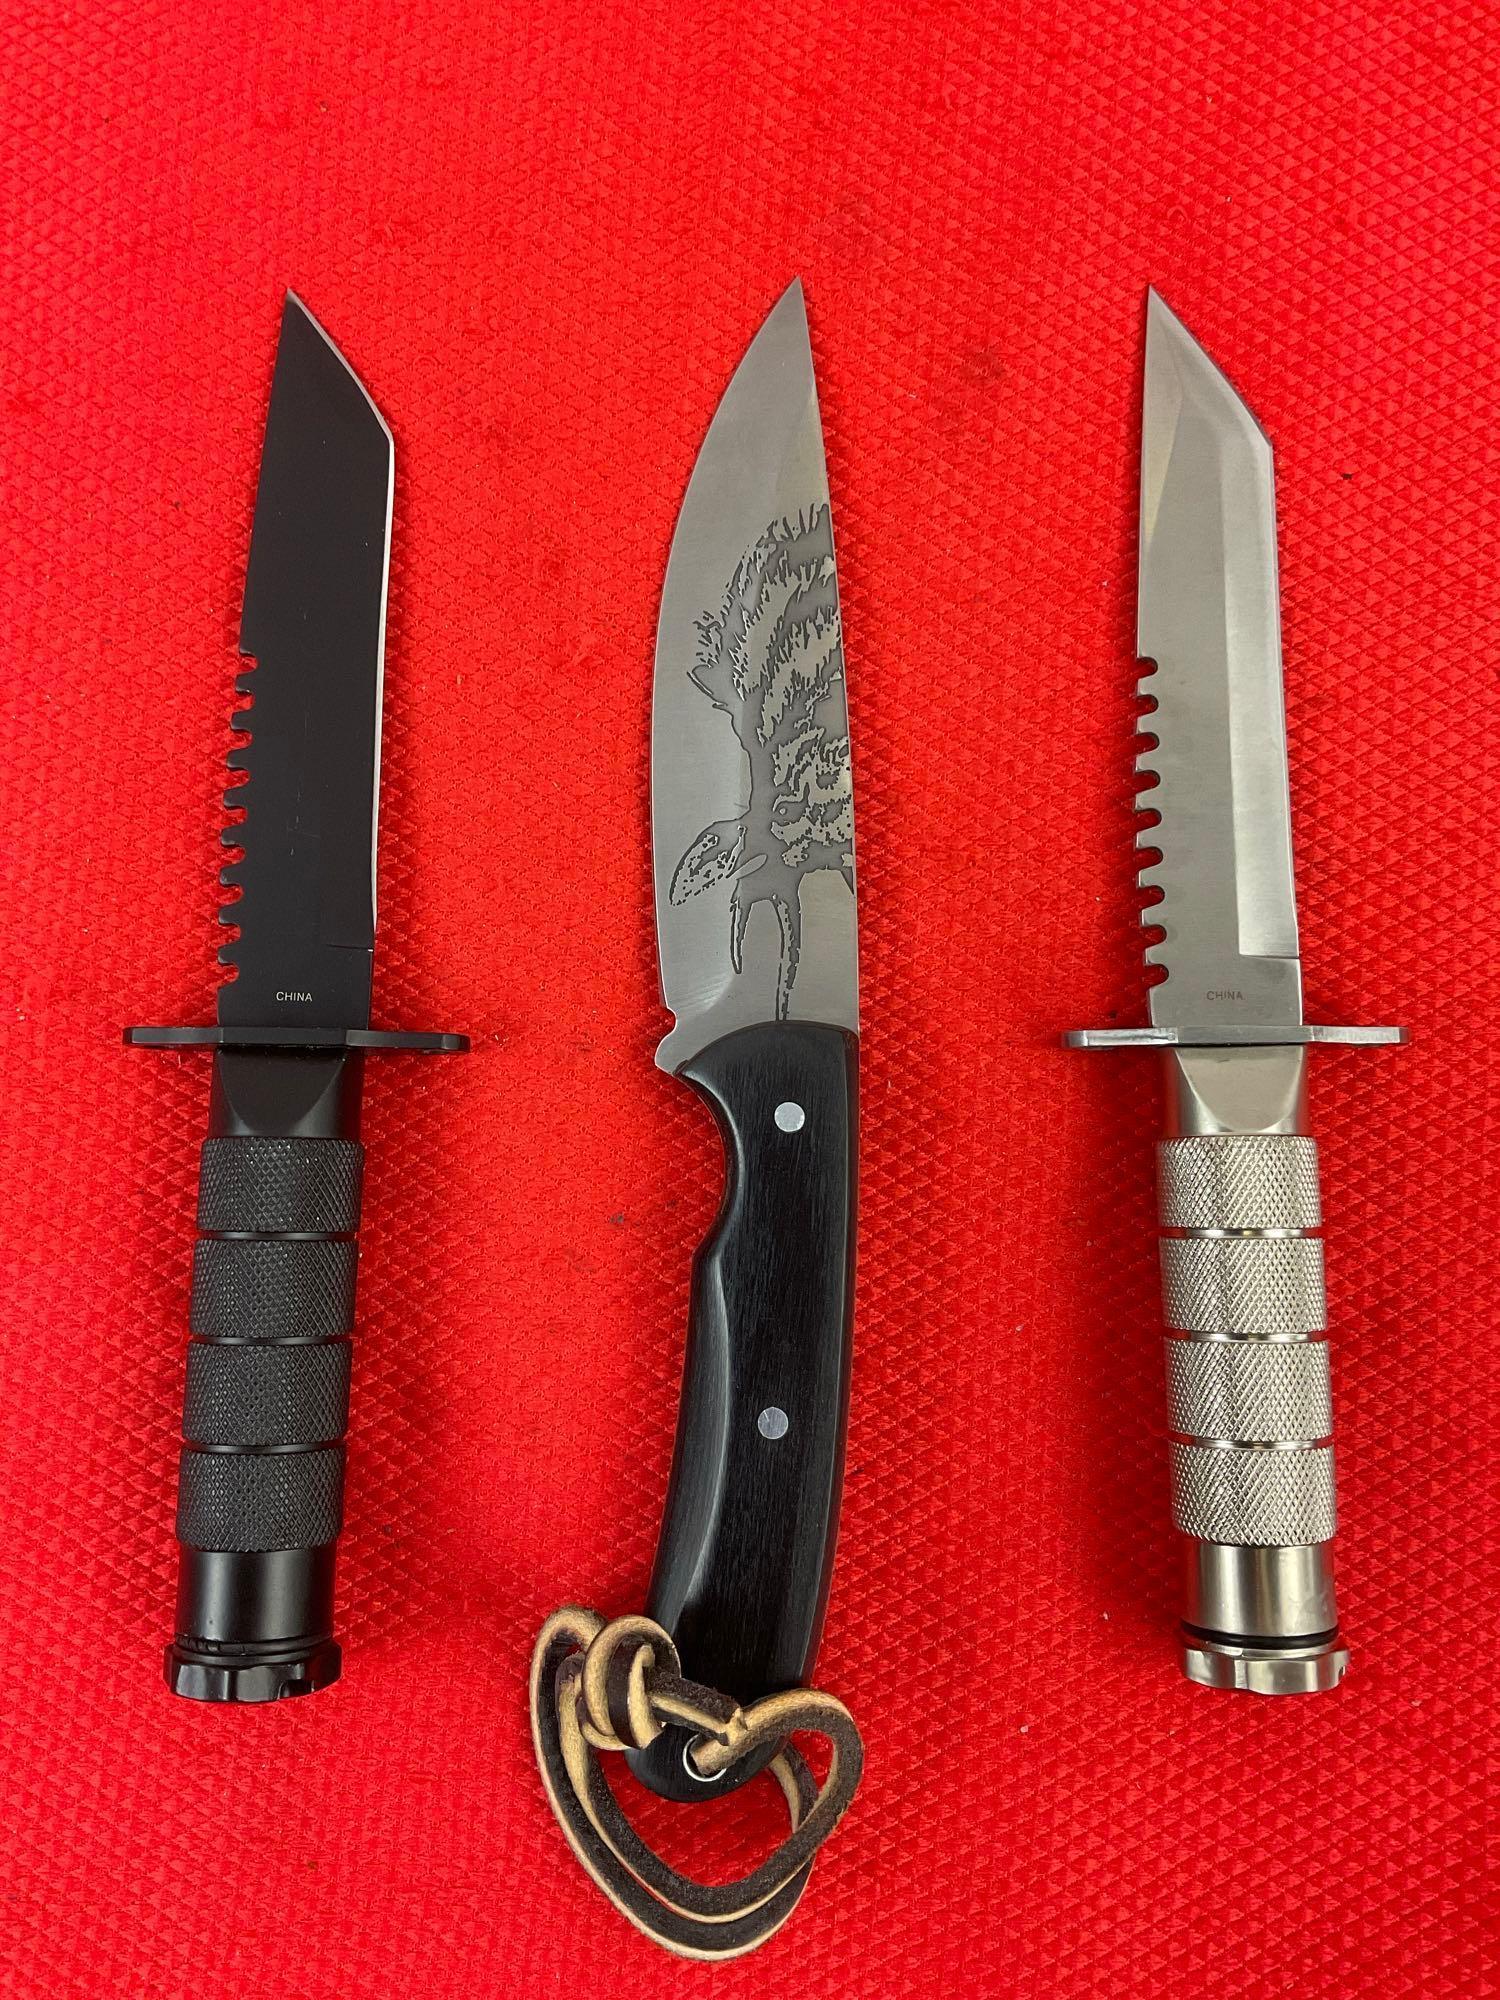 5 pcs Defender Steel Fixed Blade Hunting Knives w/ Sheathes Models 5219, 5220, 5221. NIB. See pics.